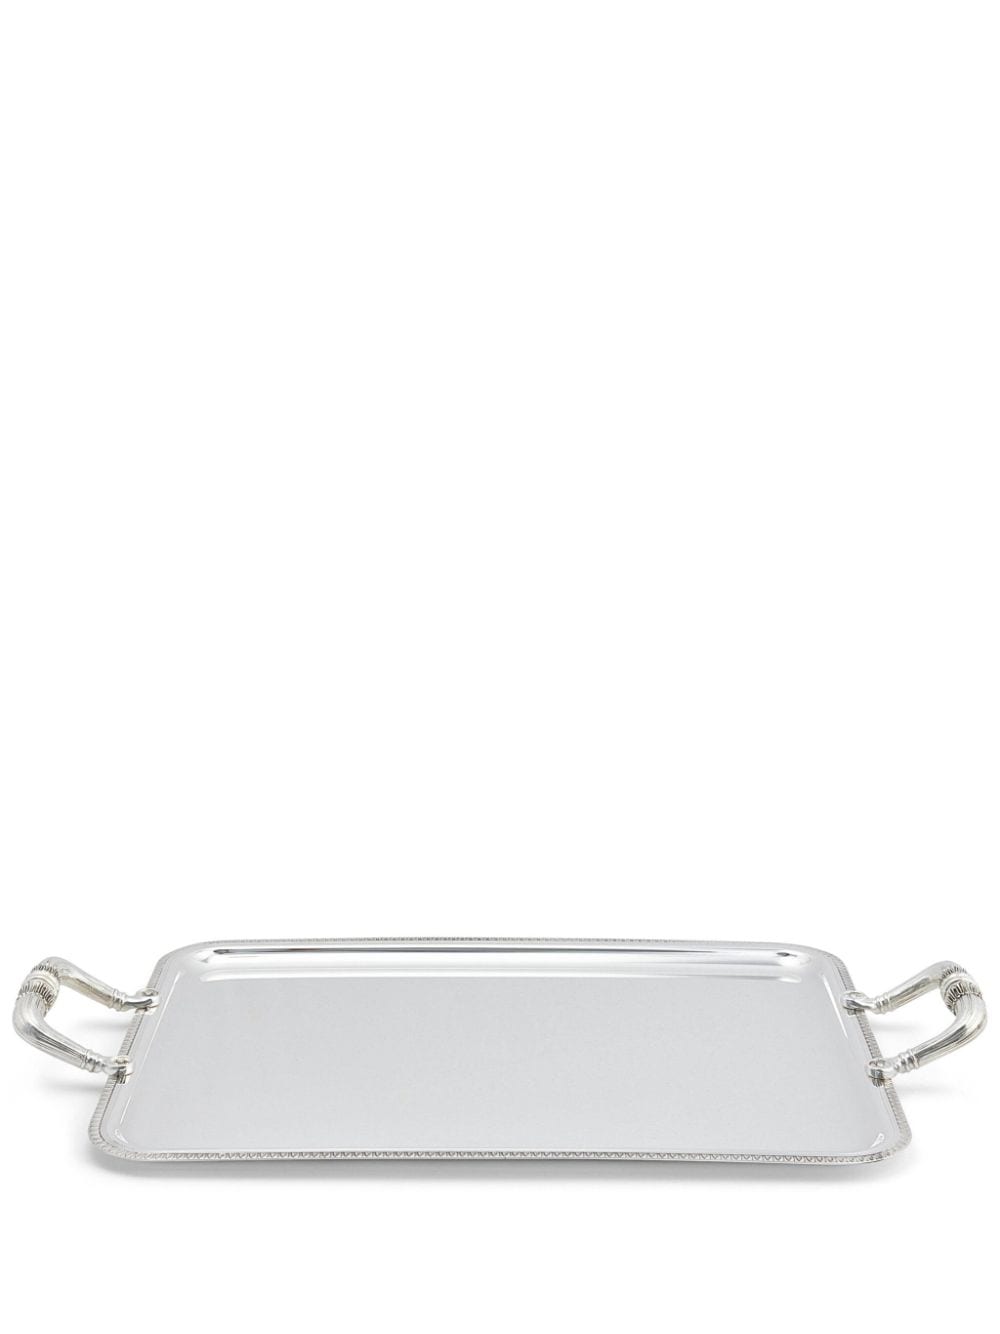 Christofle Malmaison Rectangle-shape Tray In Silver